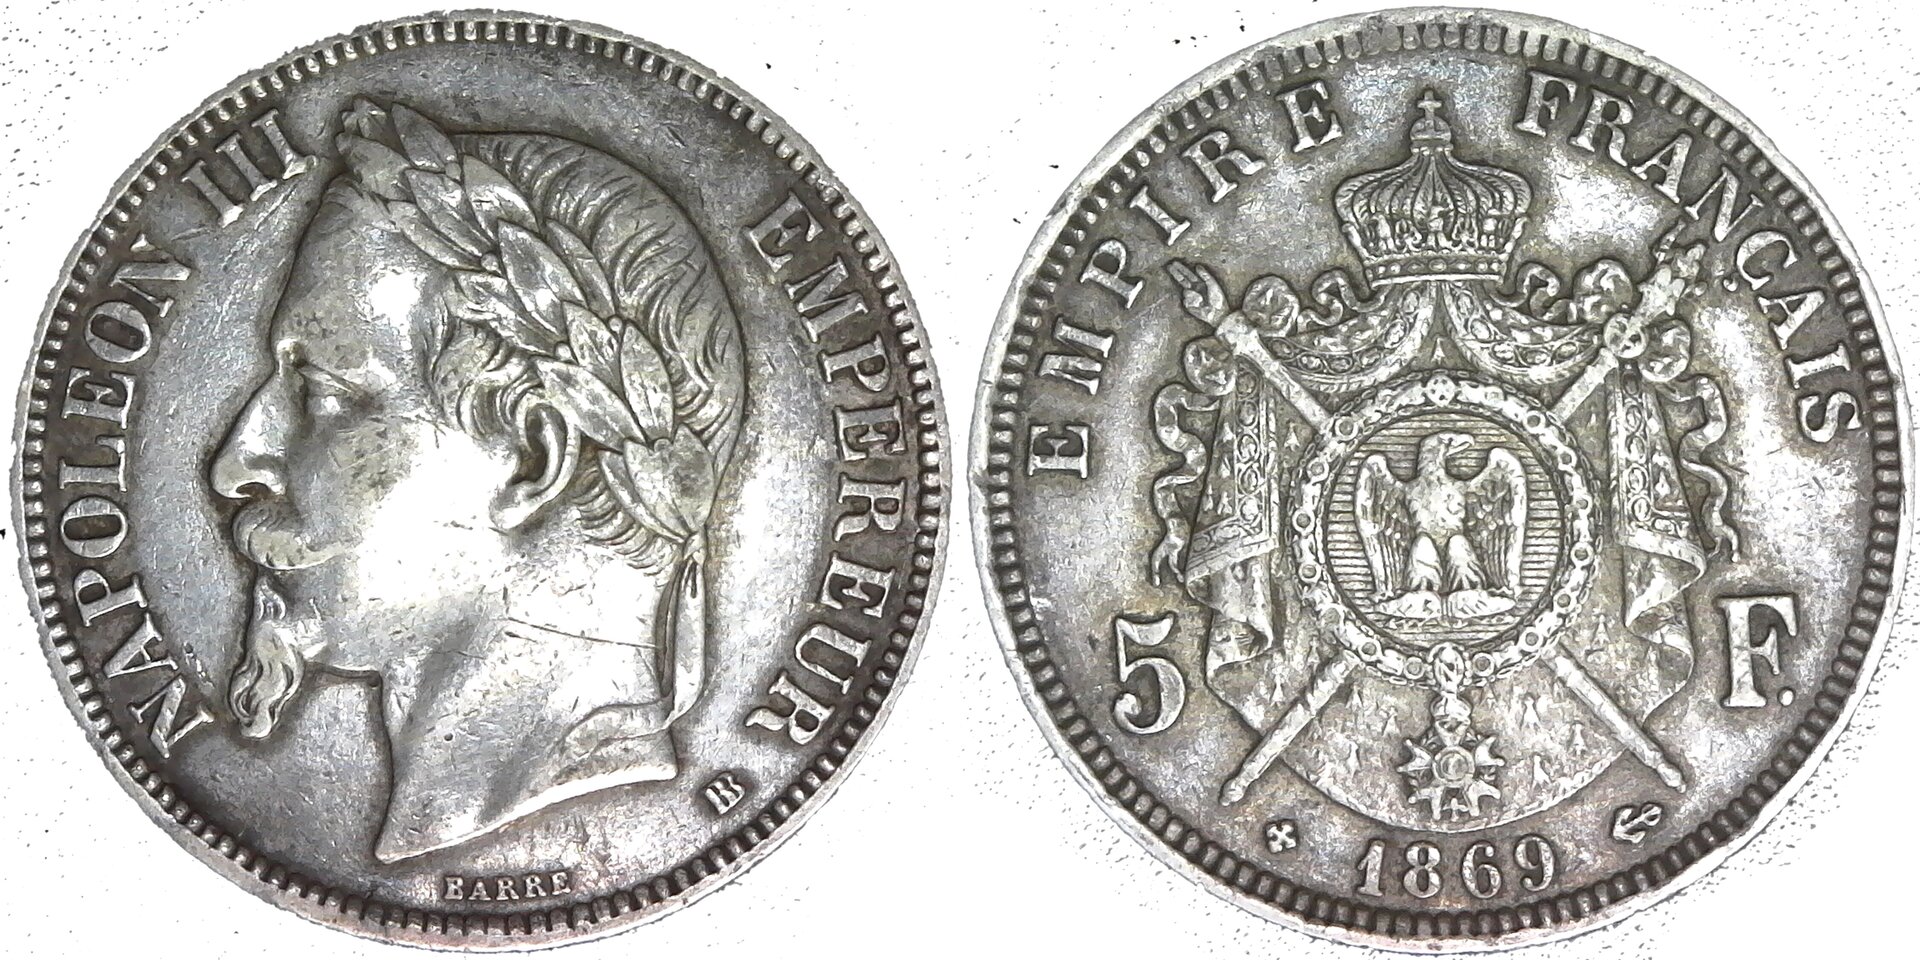 France 5 Francs 1869 reverse-side-cutout.jpg